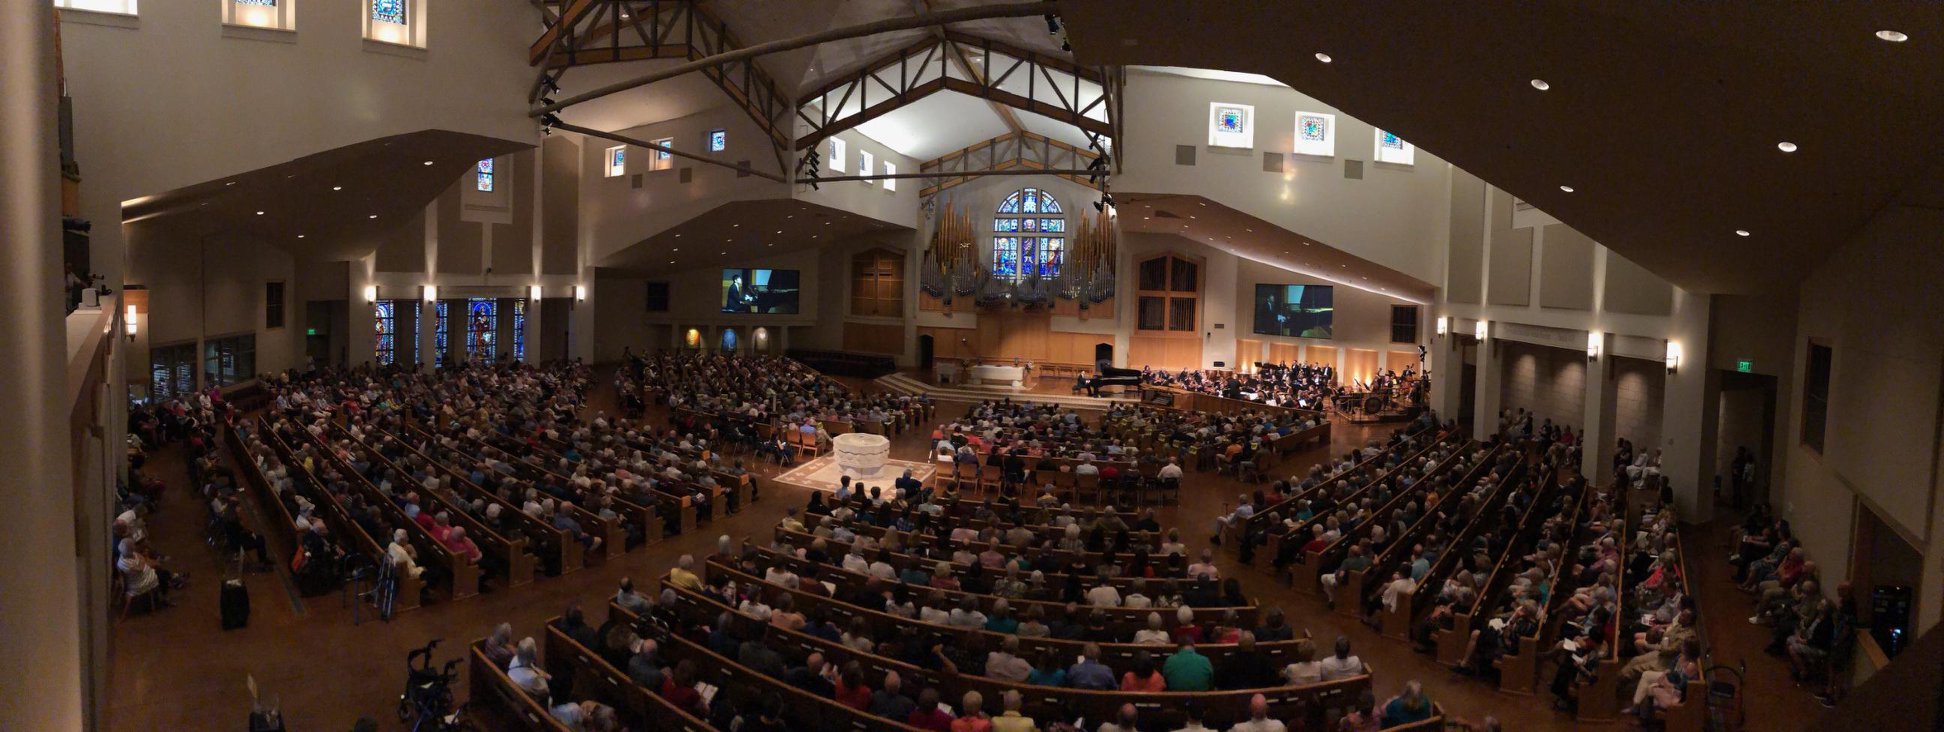 Scottsdale Philharmonic Concert | 10-13-2019 | La Casa de Cristo Scottsdale, Arizona Lutheran Church